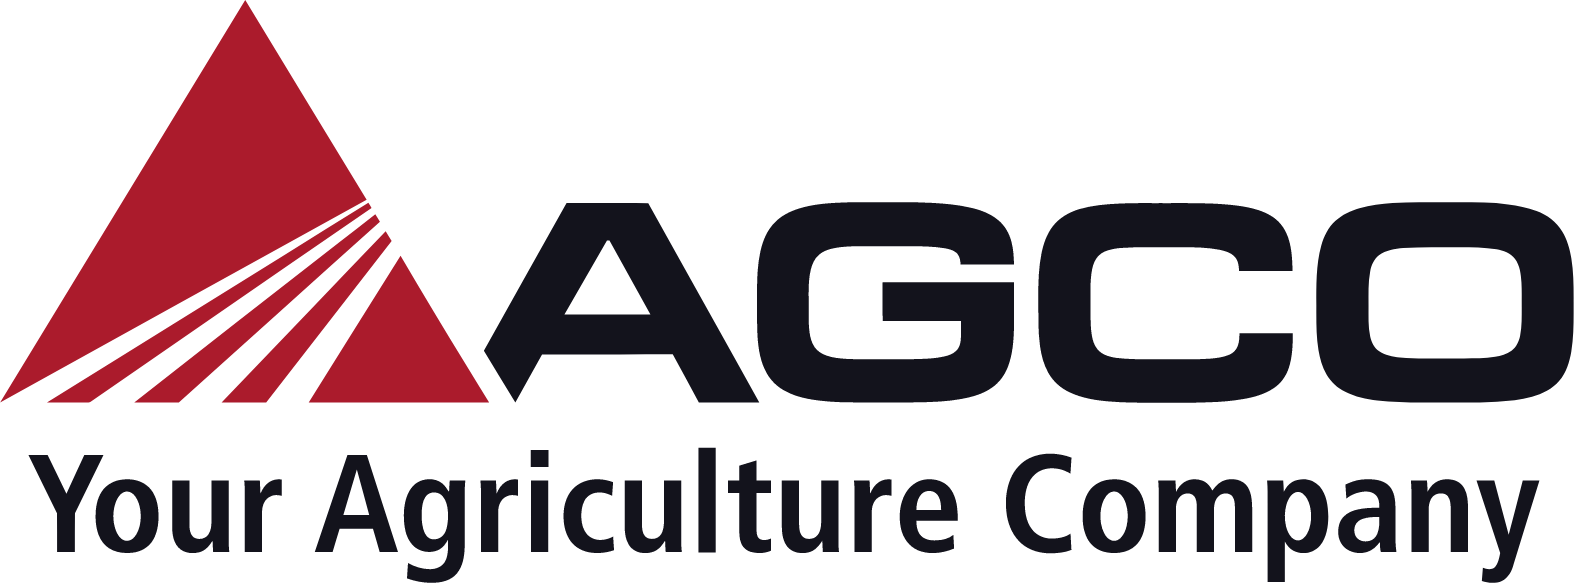 AGCO logo large (transparent PNG)